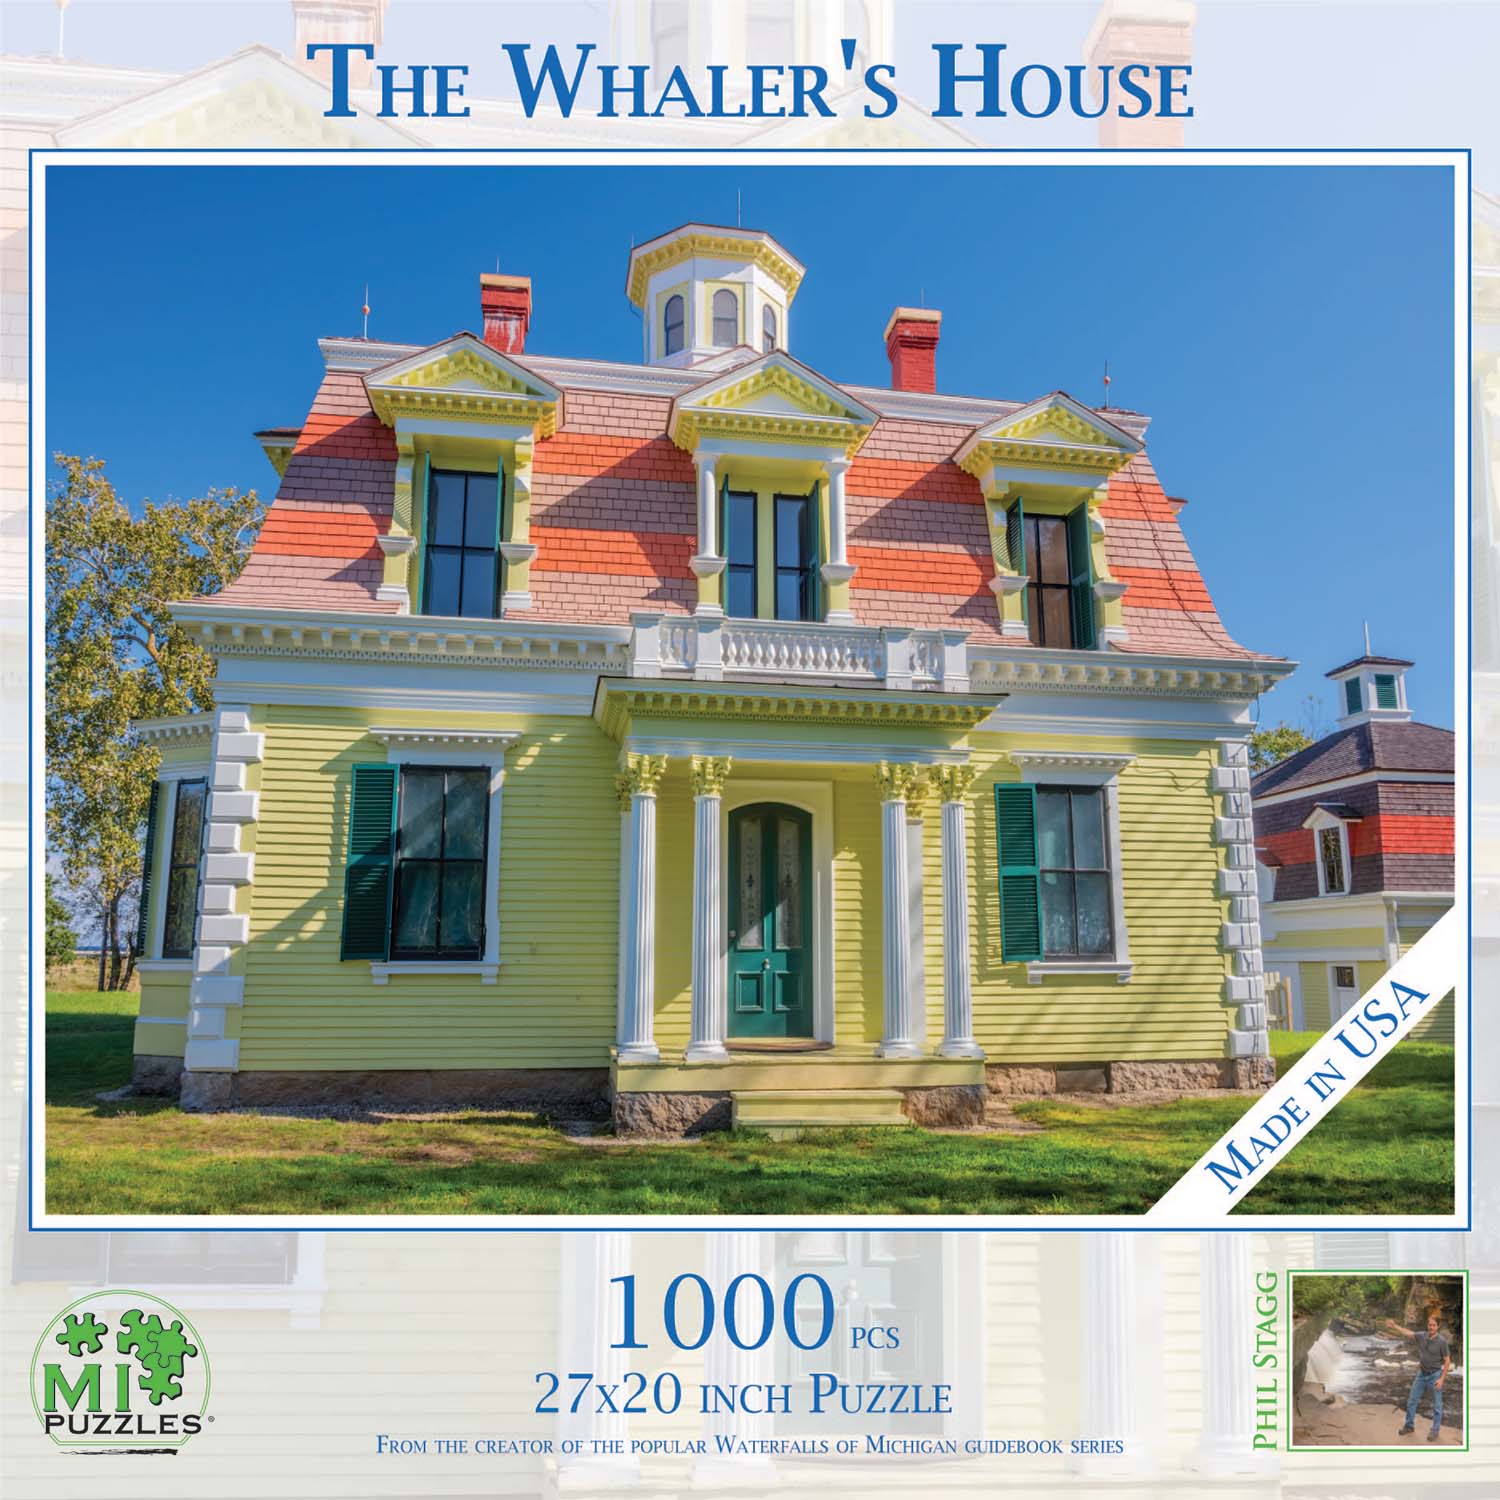 The Whaler's House